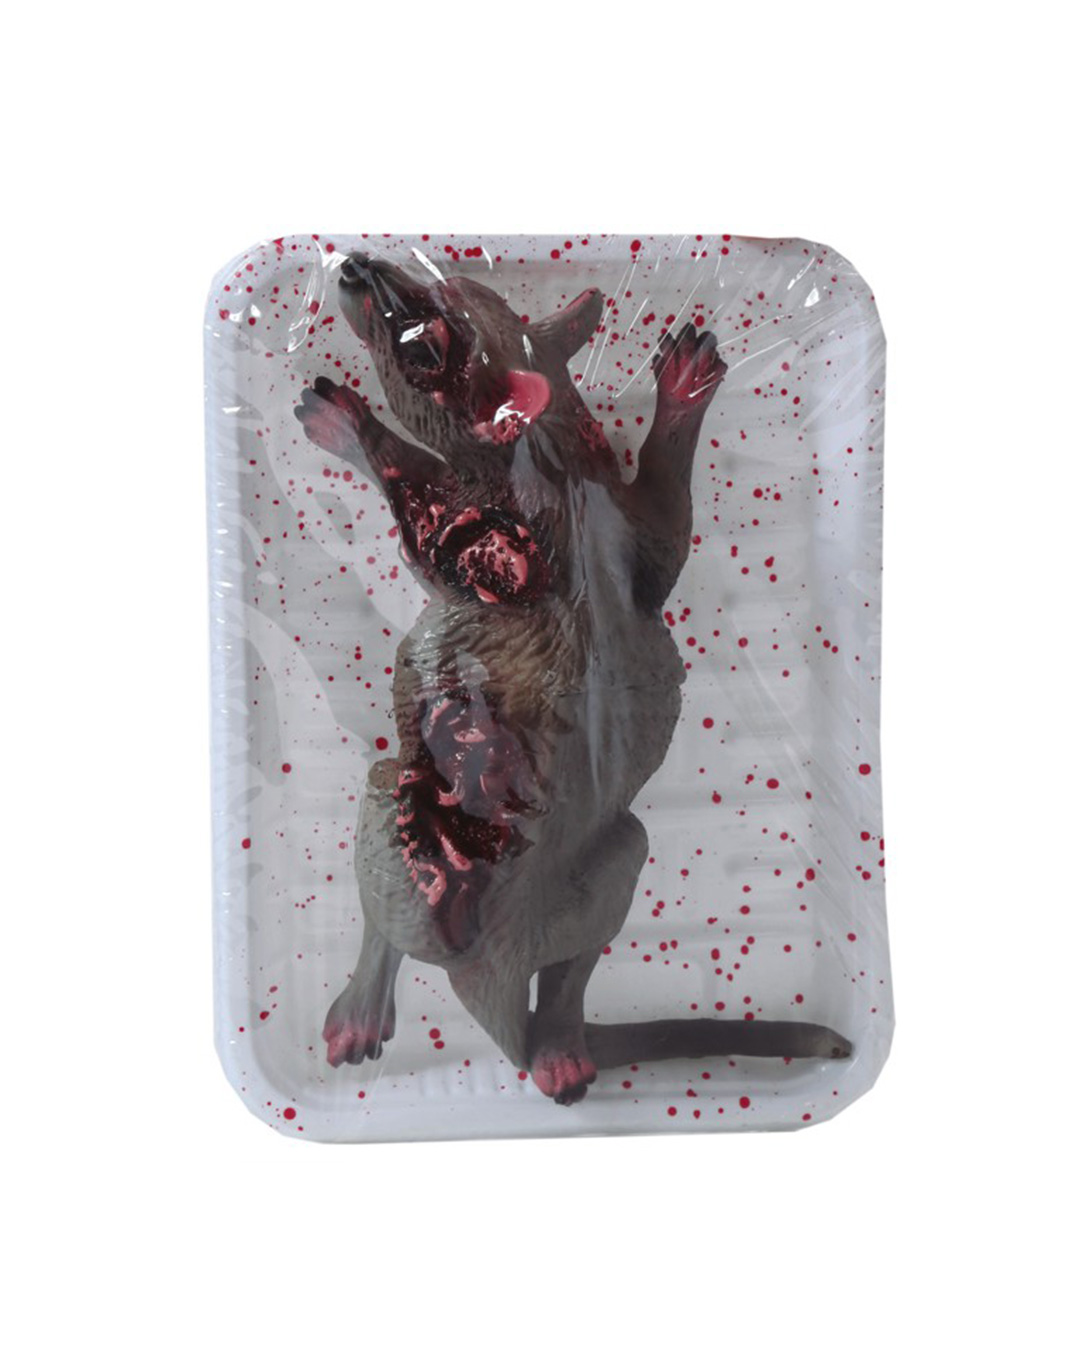 Rat In Cling Film As Halloween Decoration ▷ | Horror-Shop.com